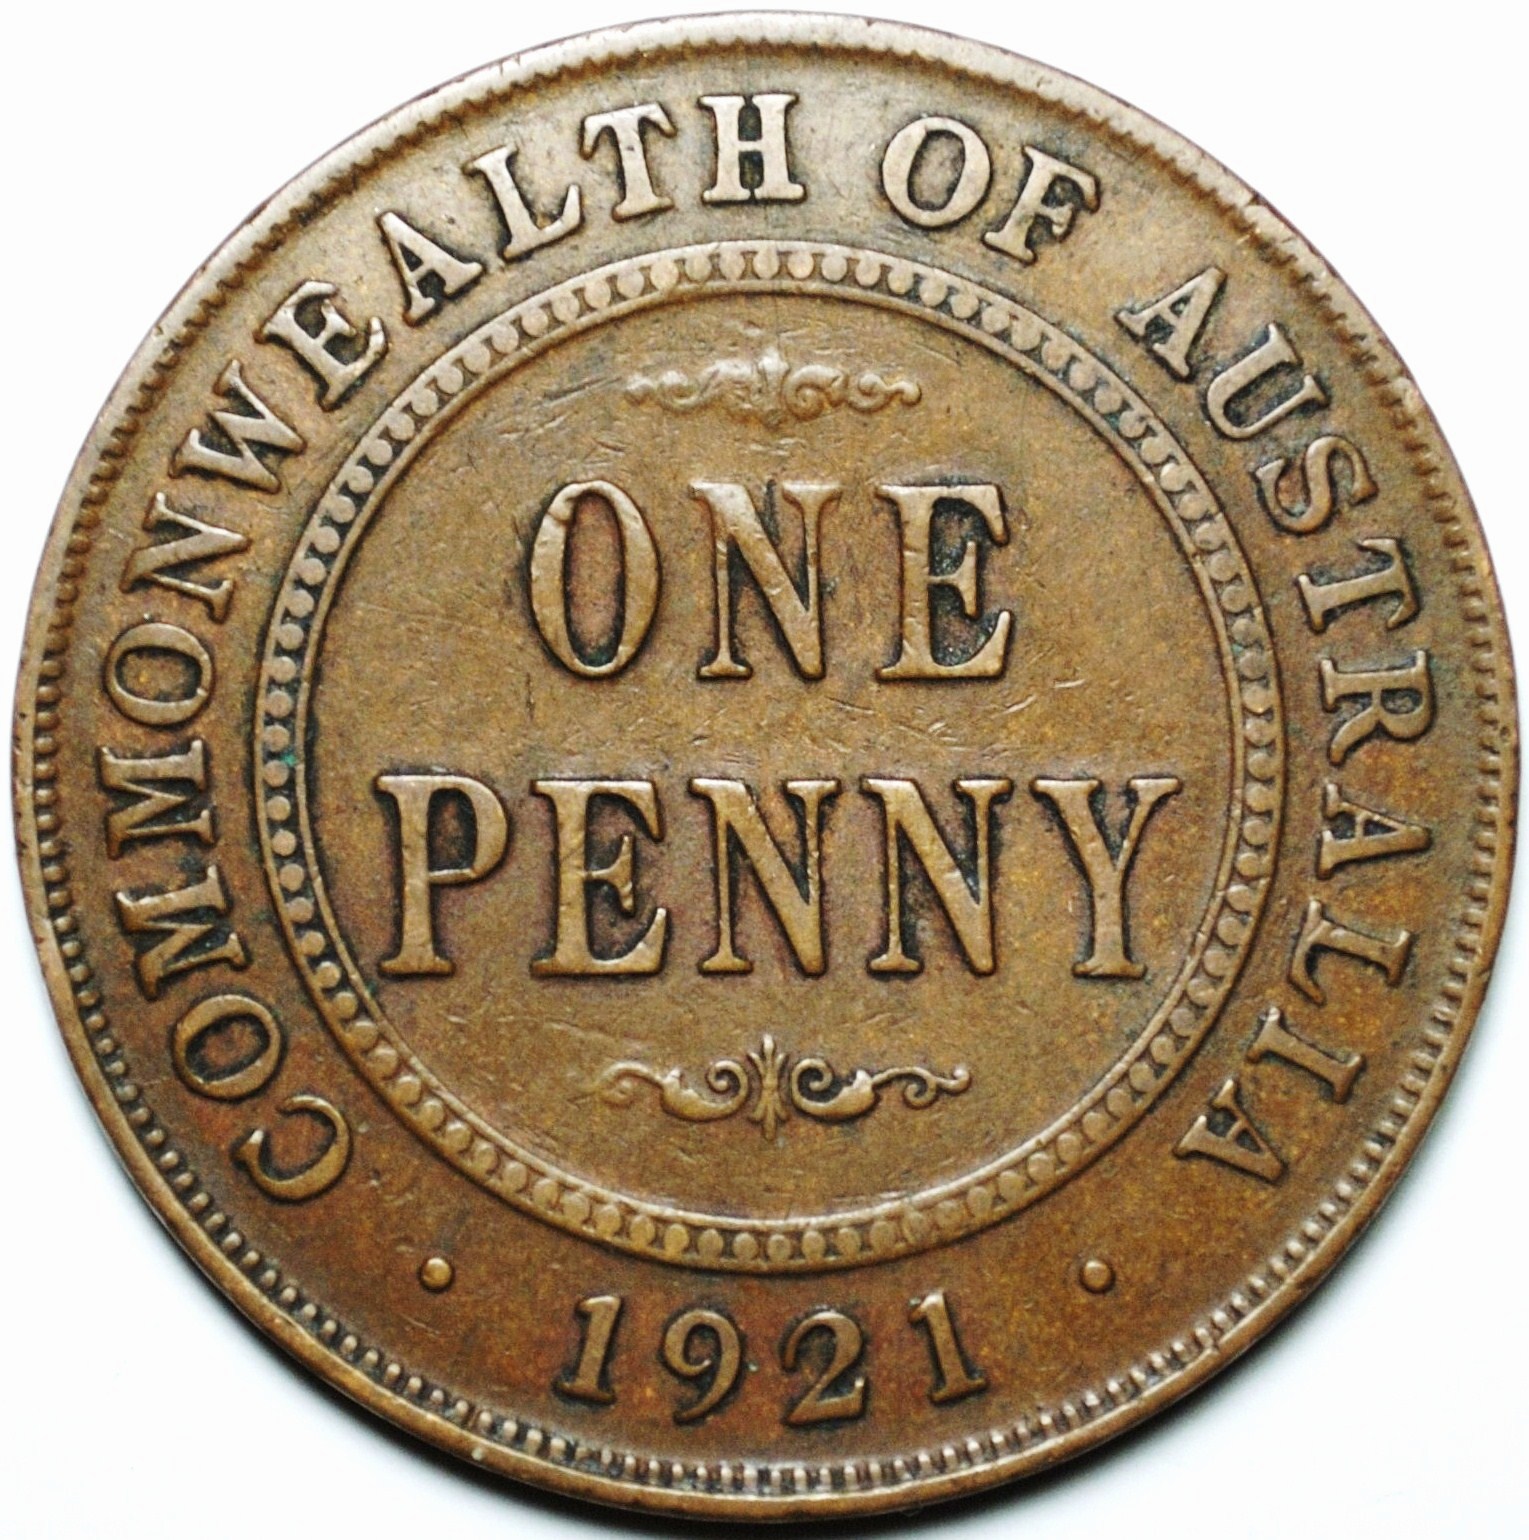 1921 Australian penny, London obverse variety, reverse